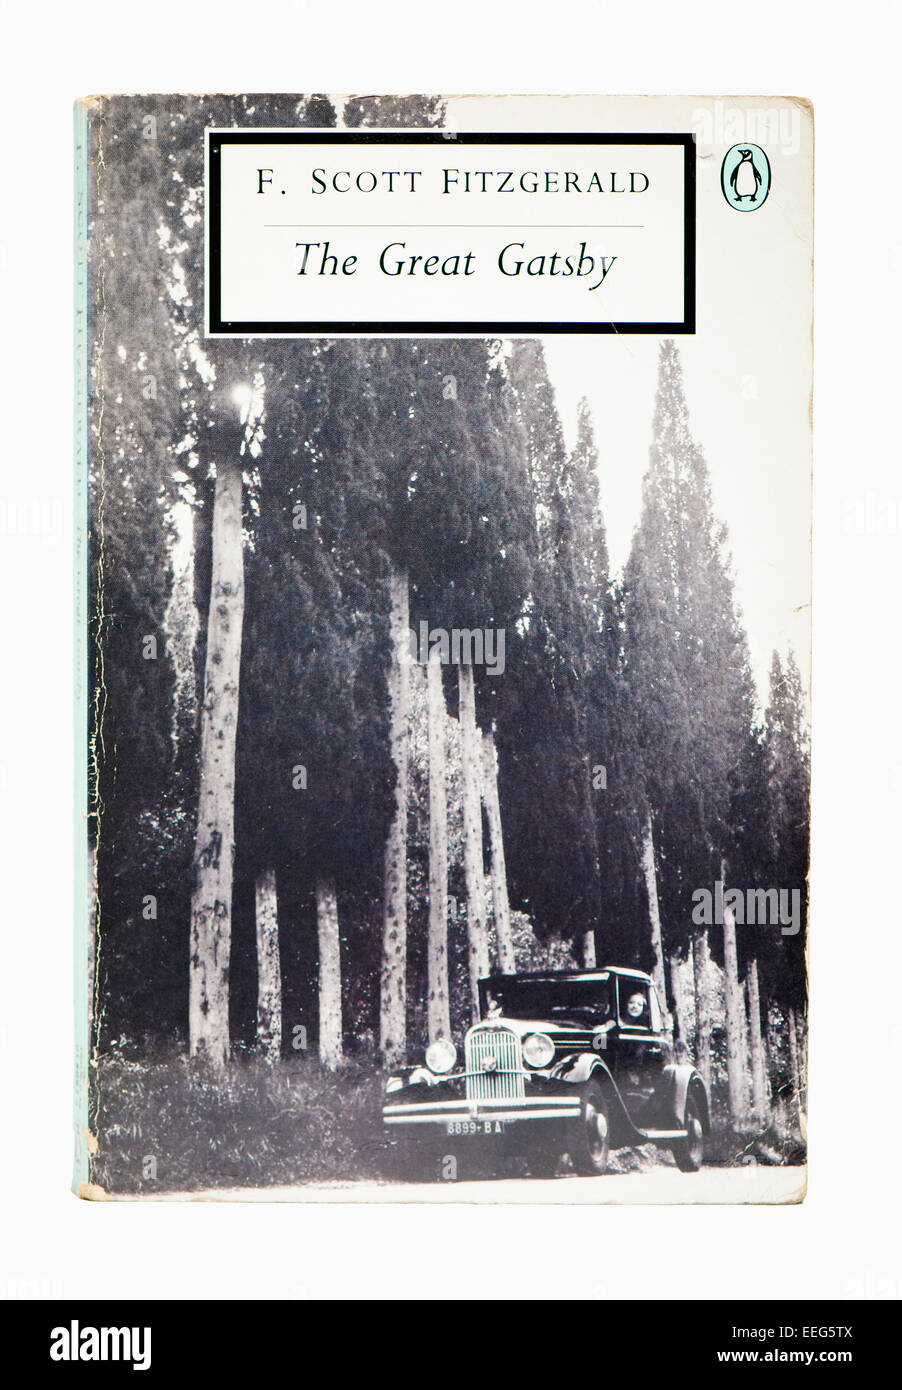 F Scott Fitzgerald The Great Gatsby Penguin Classic Book Cover Stock Photo Alamy